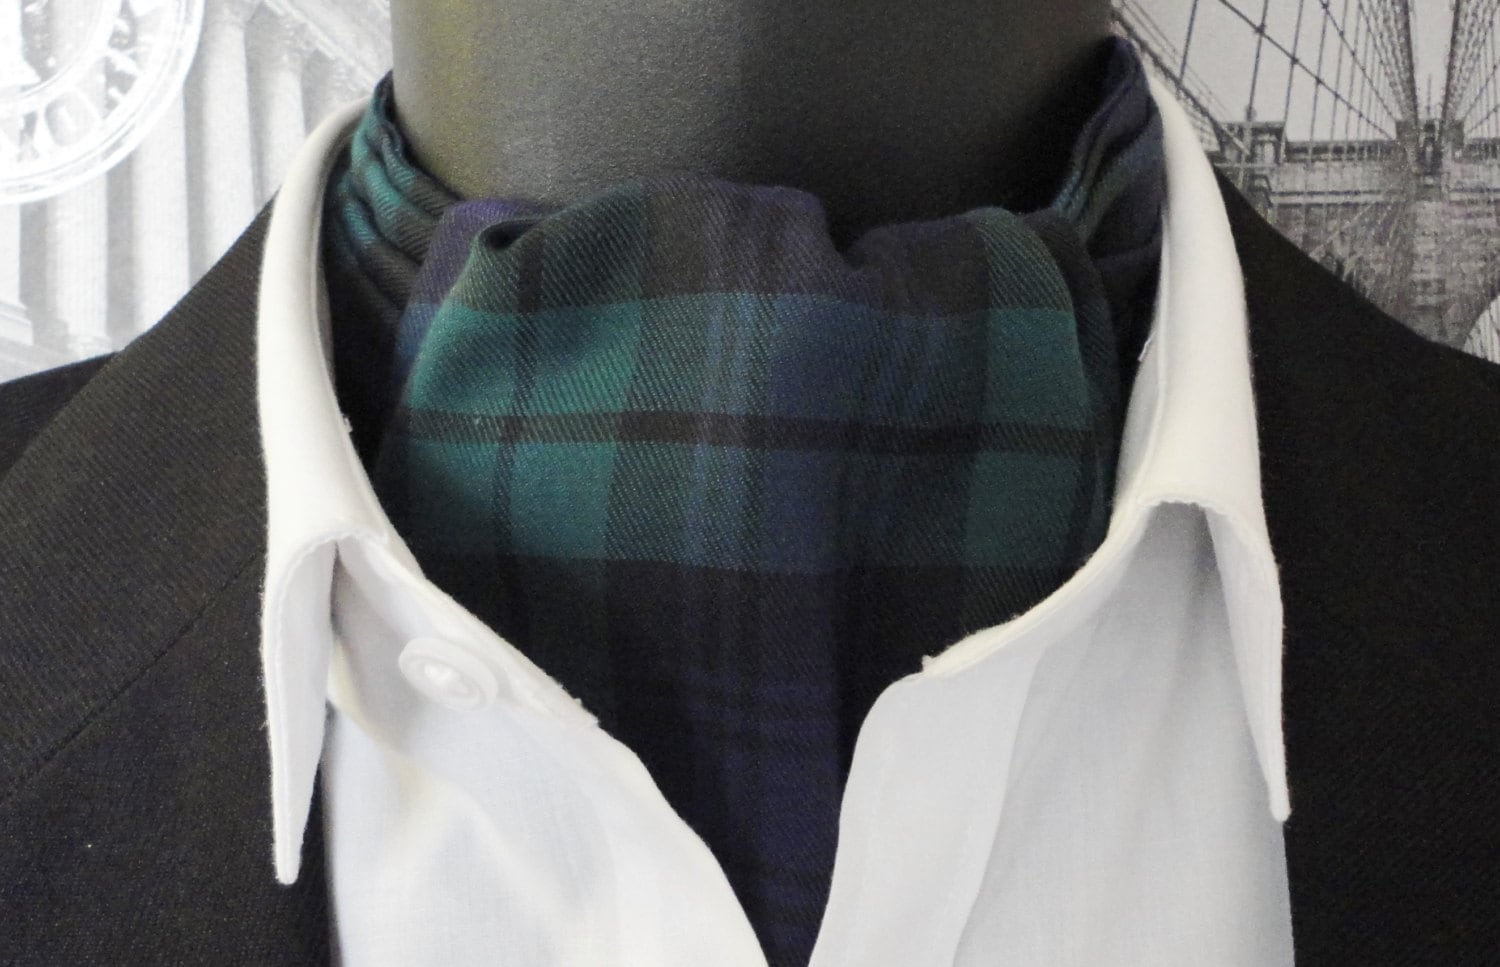 Cravat, Black Watch Tartan Cravat for Men, Ascots for Men - Etsy UK